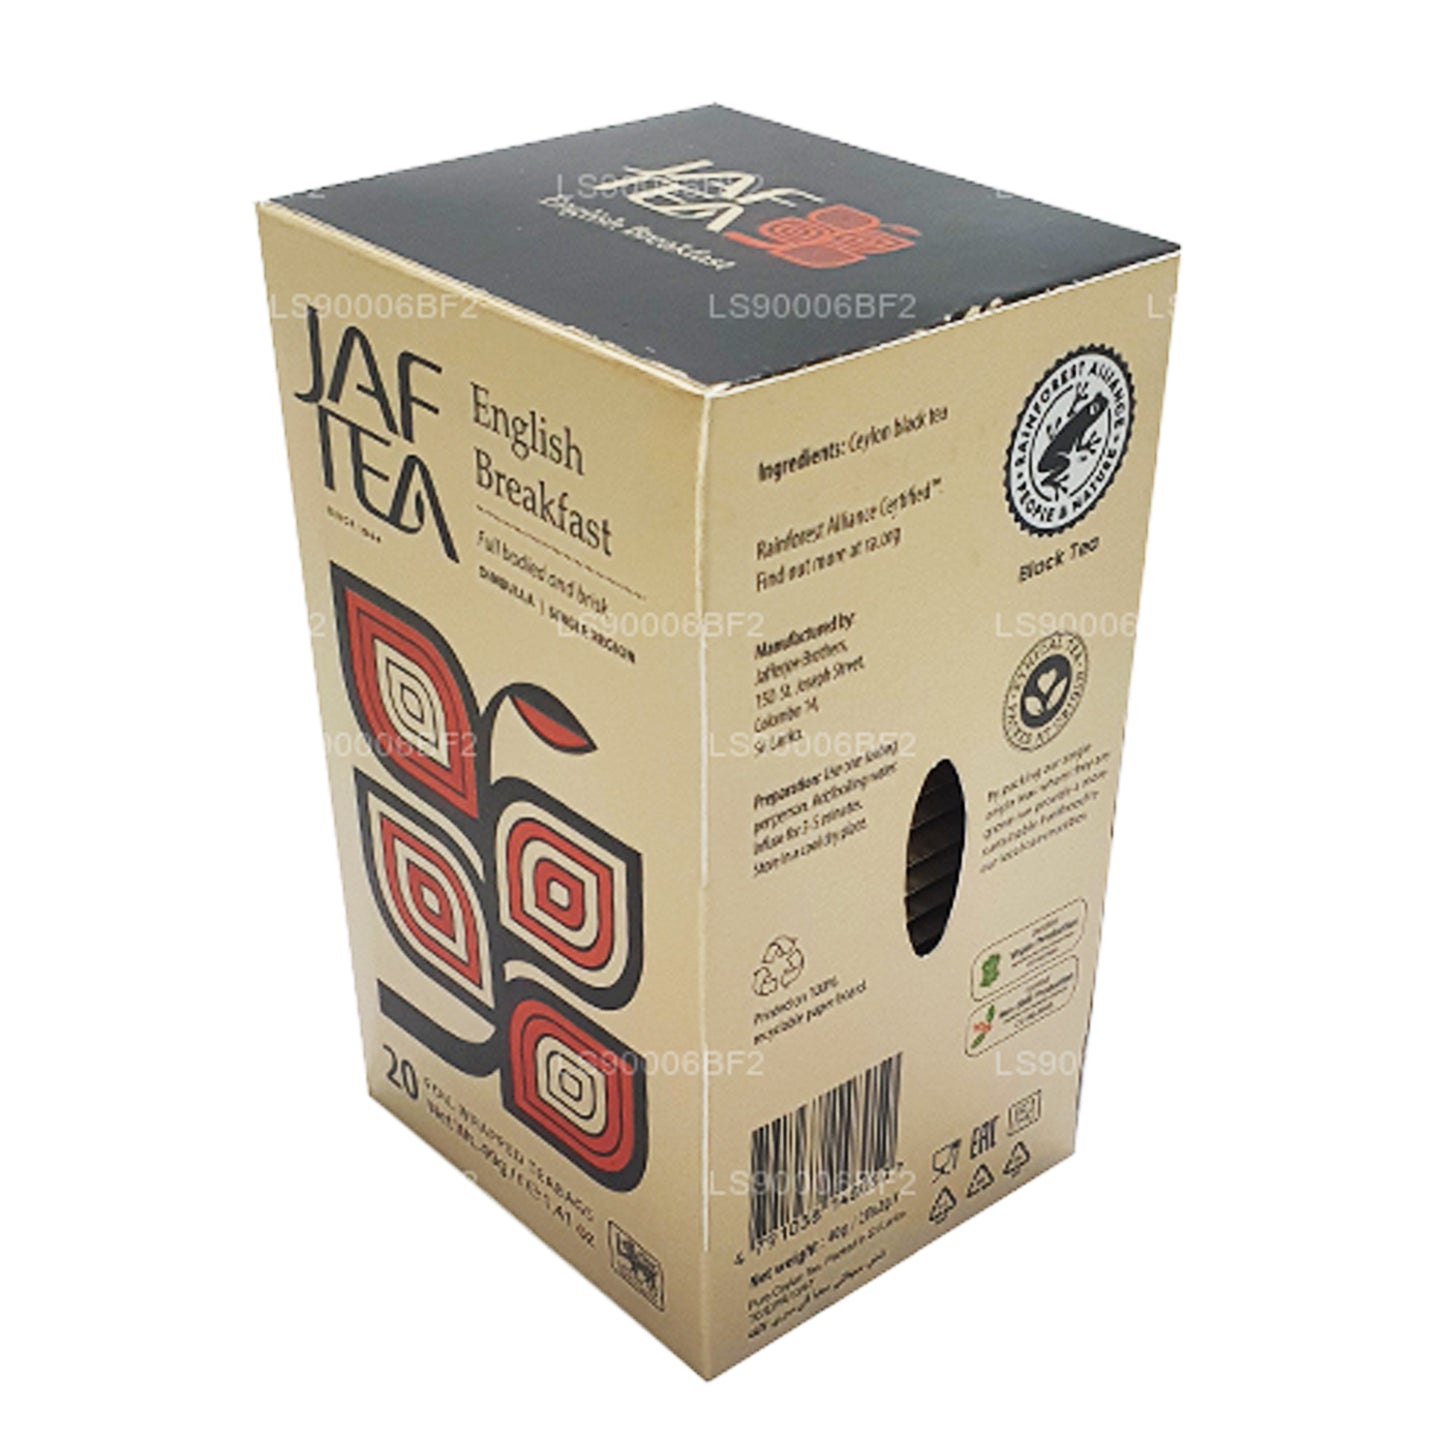 Jaf Tea 英式早餐 (40g) 20 茶包